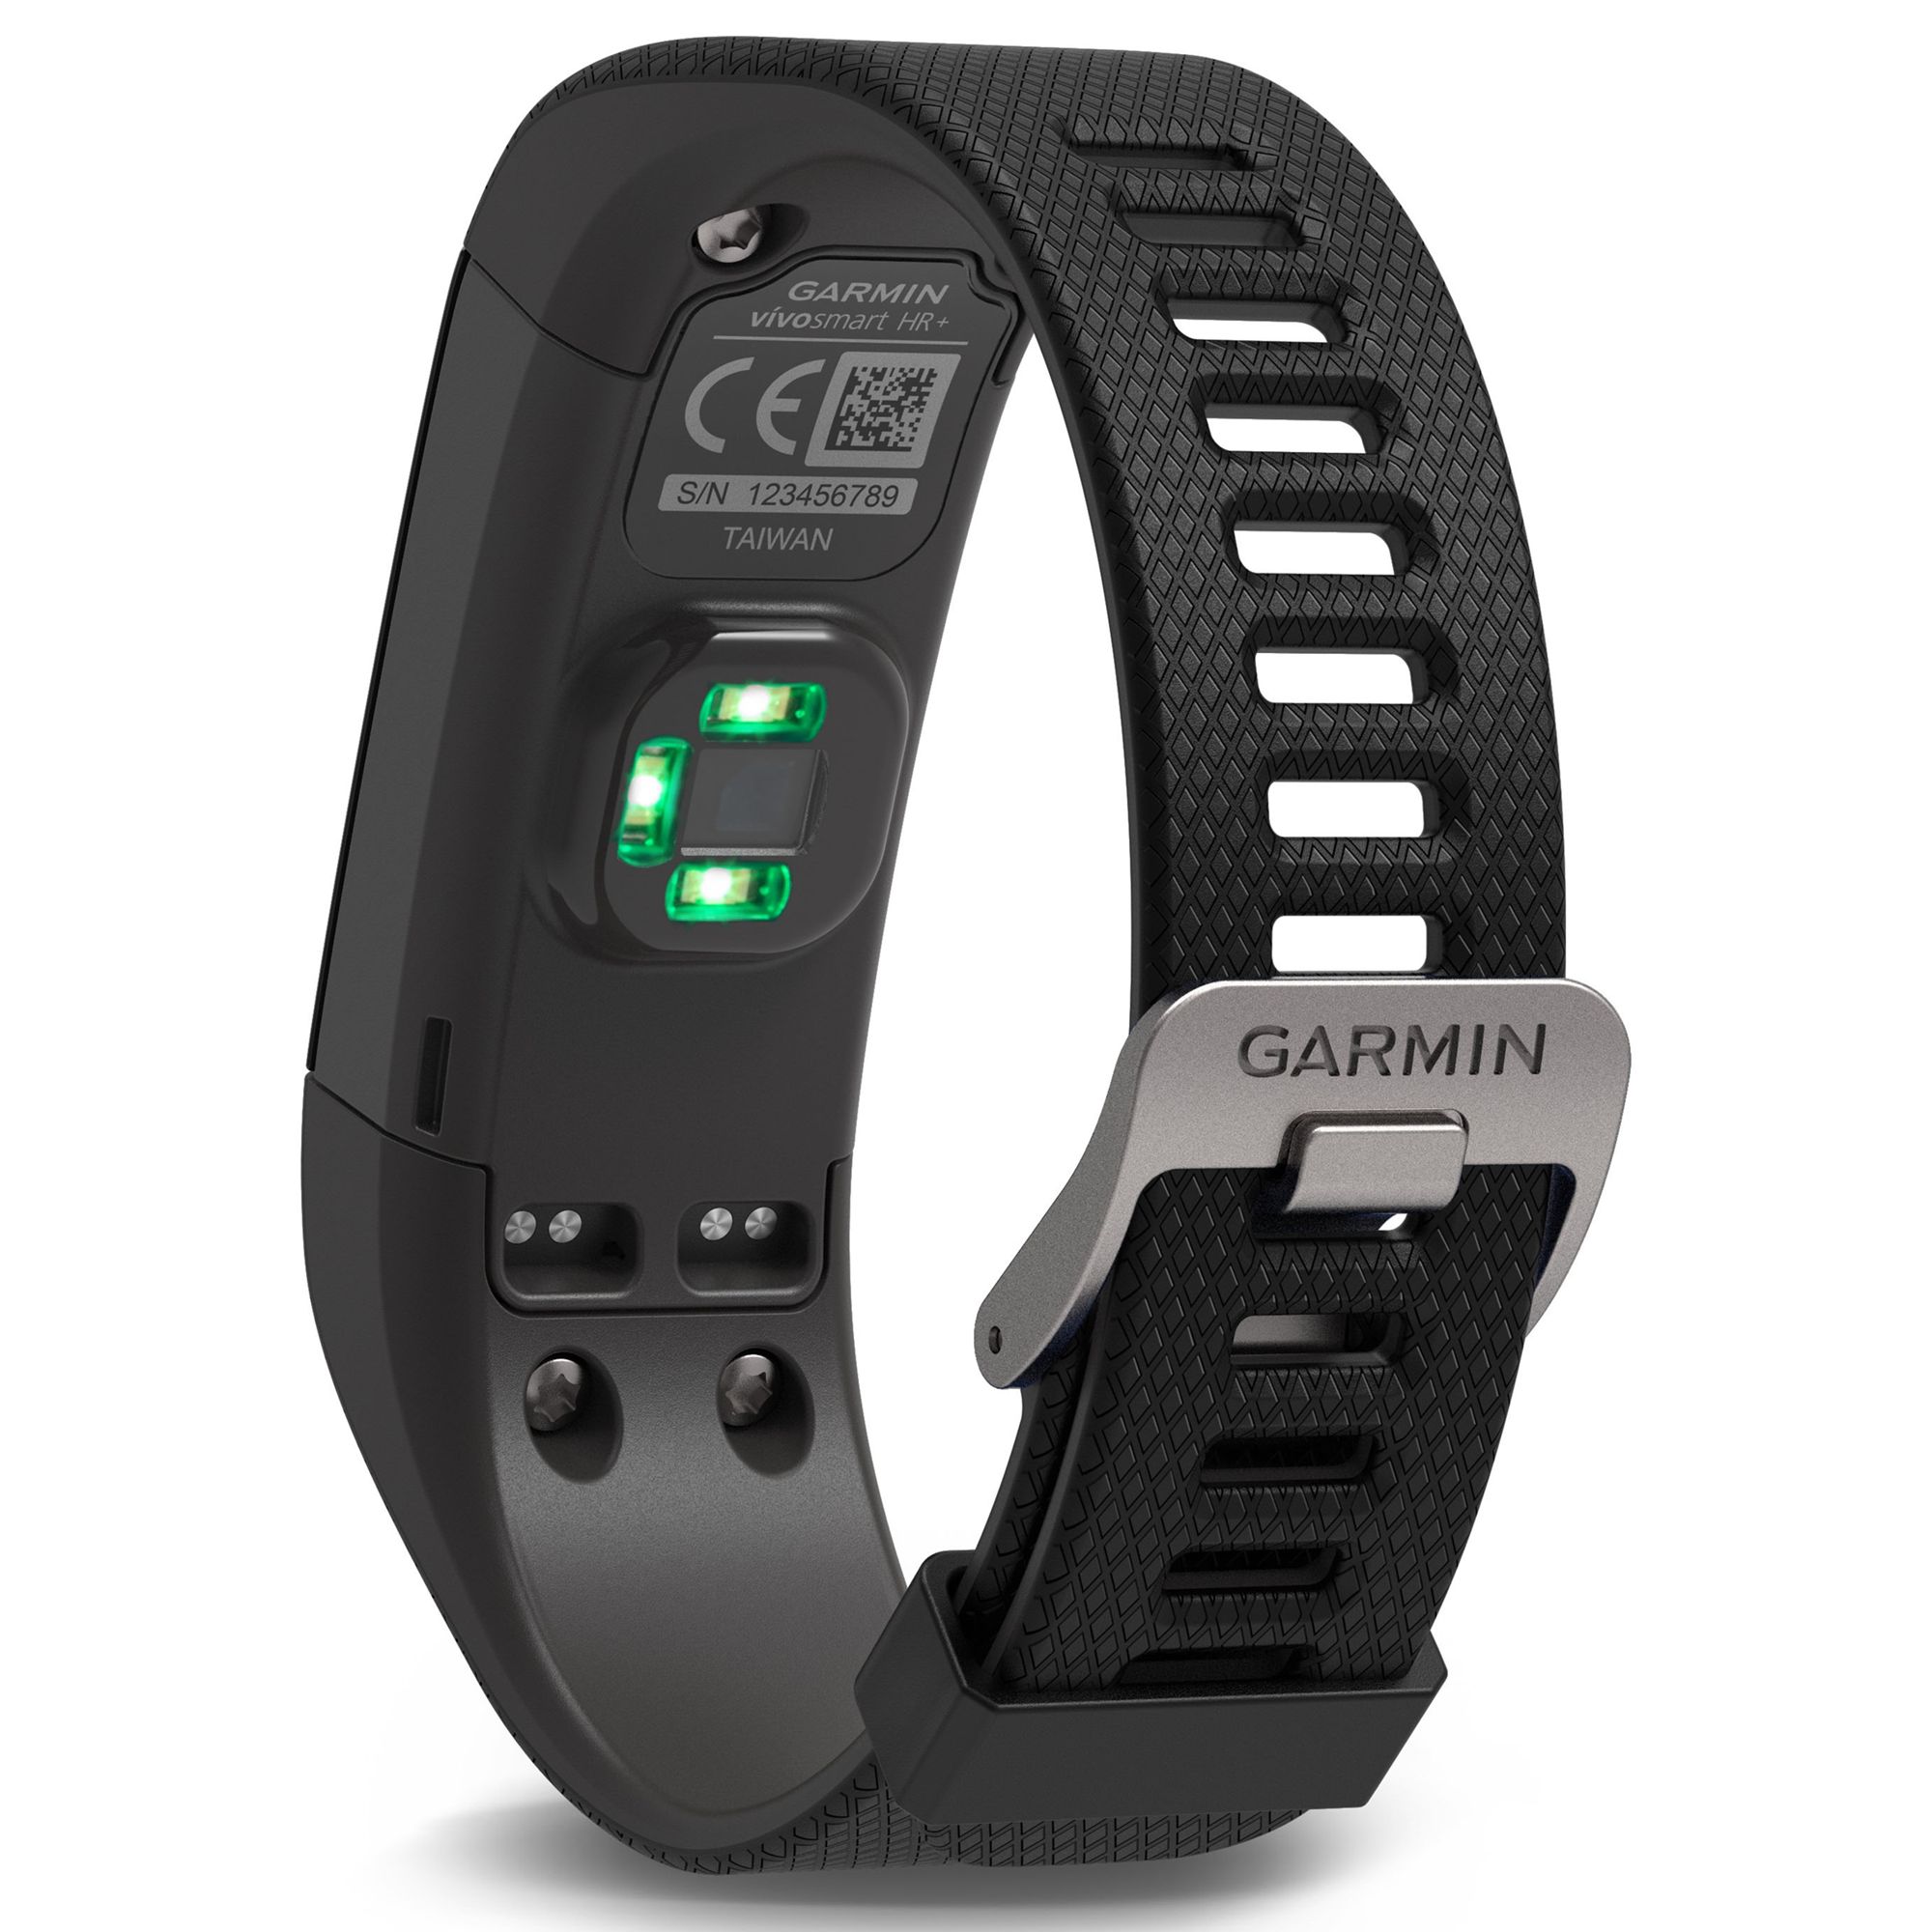 Garmin vivosmart Sports GPS Activity Tracker With Wrist Heart Rate Monitor, Regular, Black